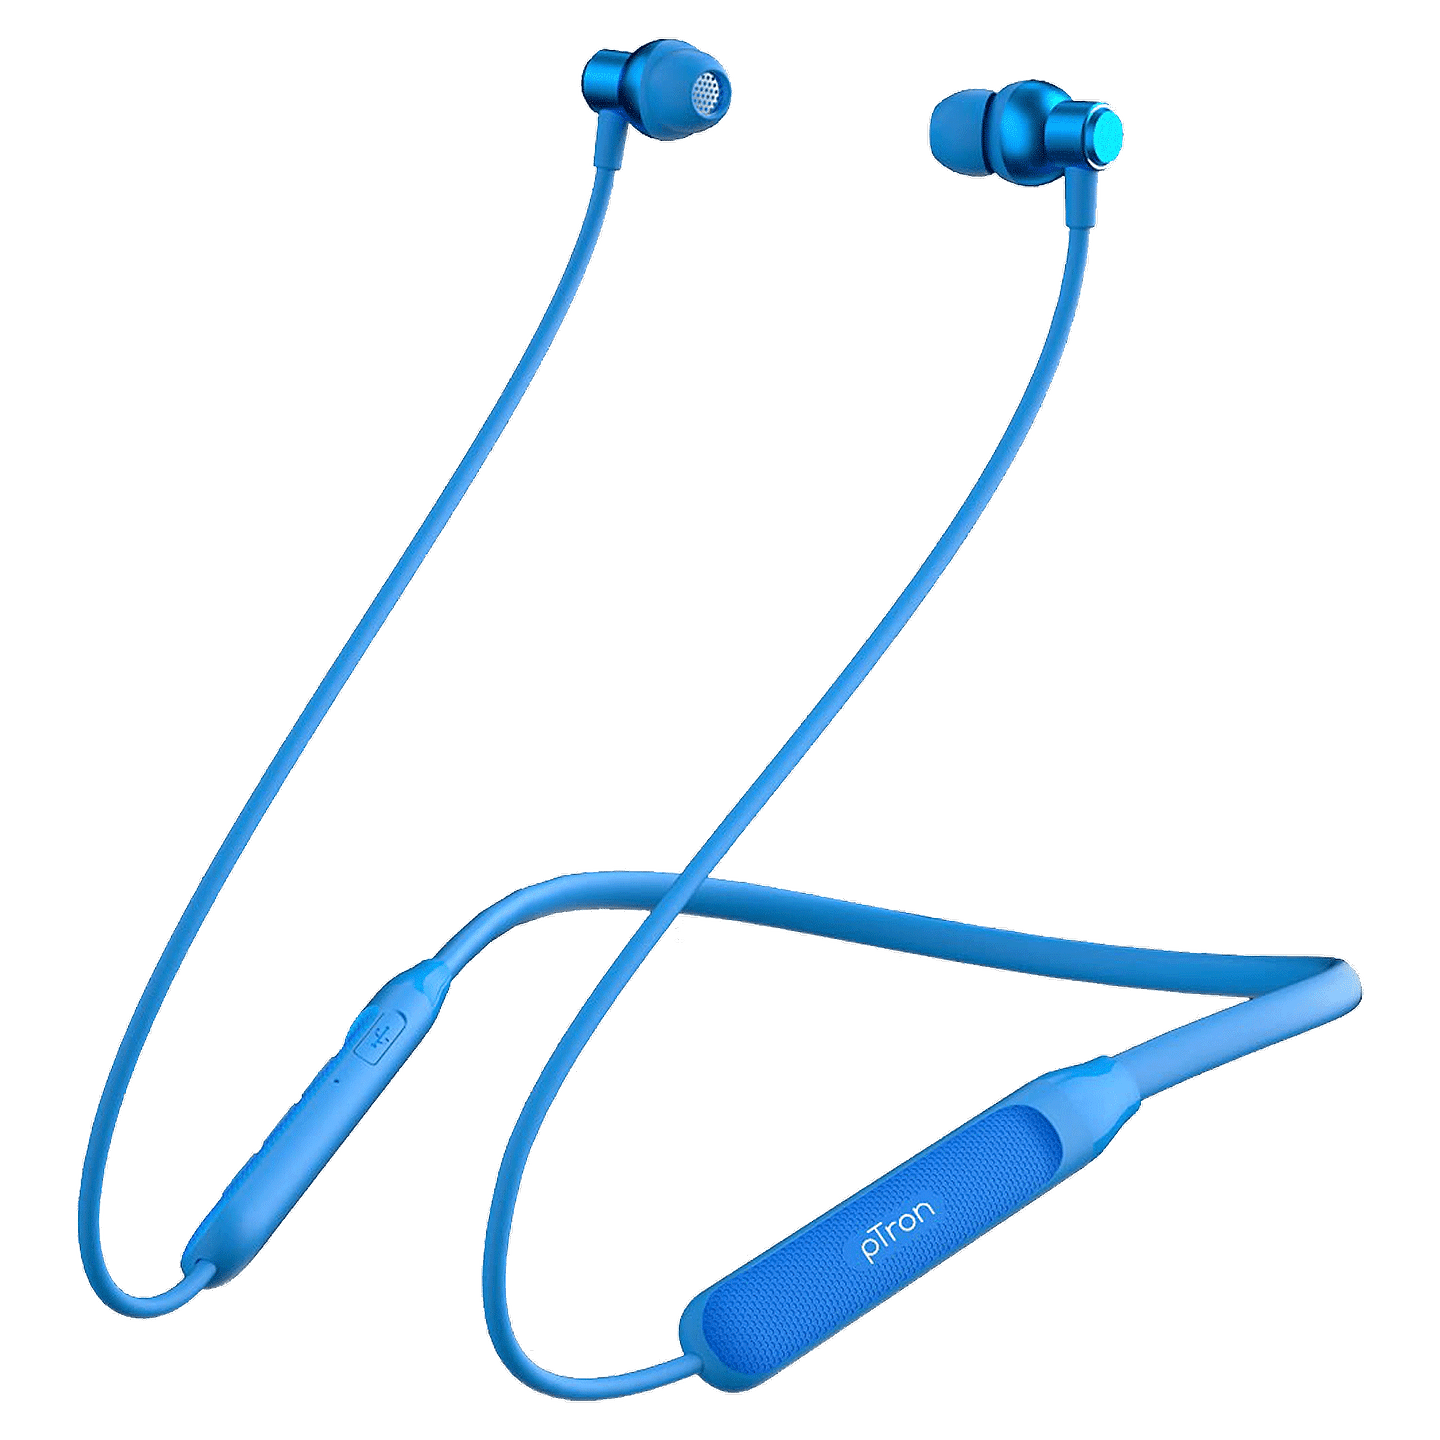 pTron Tangent Evo 140318076 In-Ear Wireless Earphone with Mic (Bluetooth 5.0, Deep Bass, Blue)  